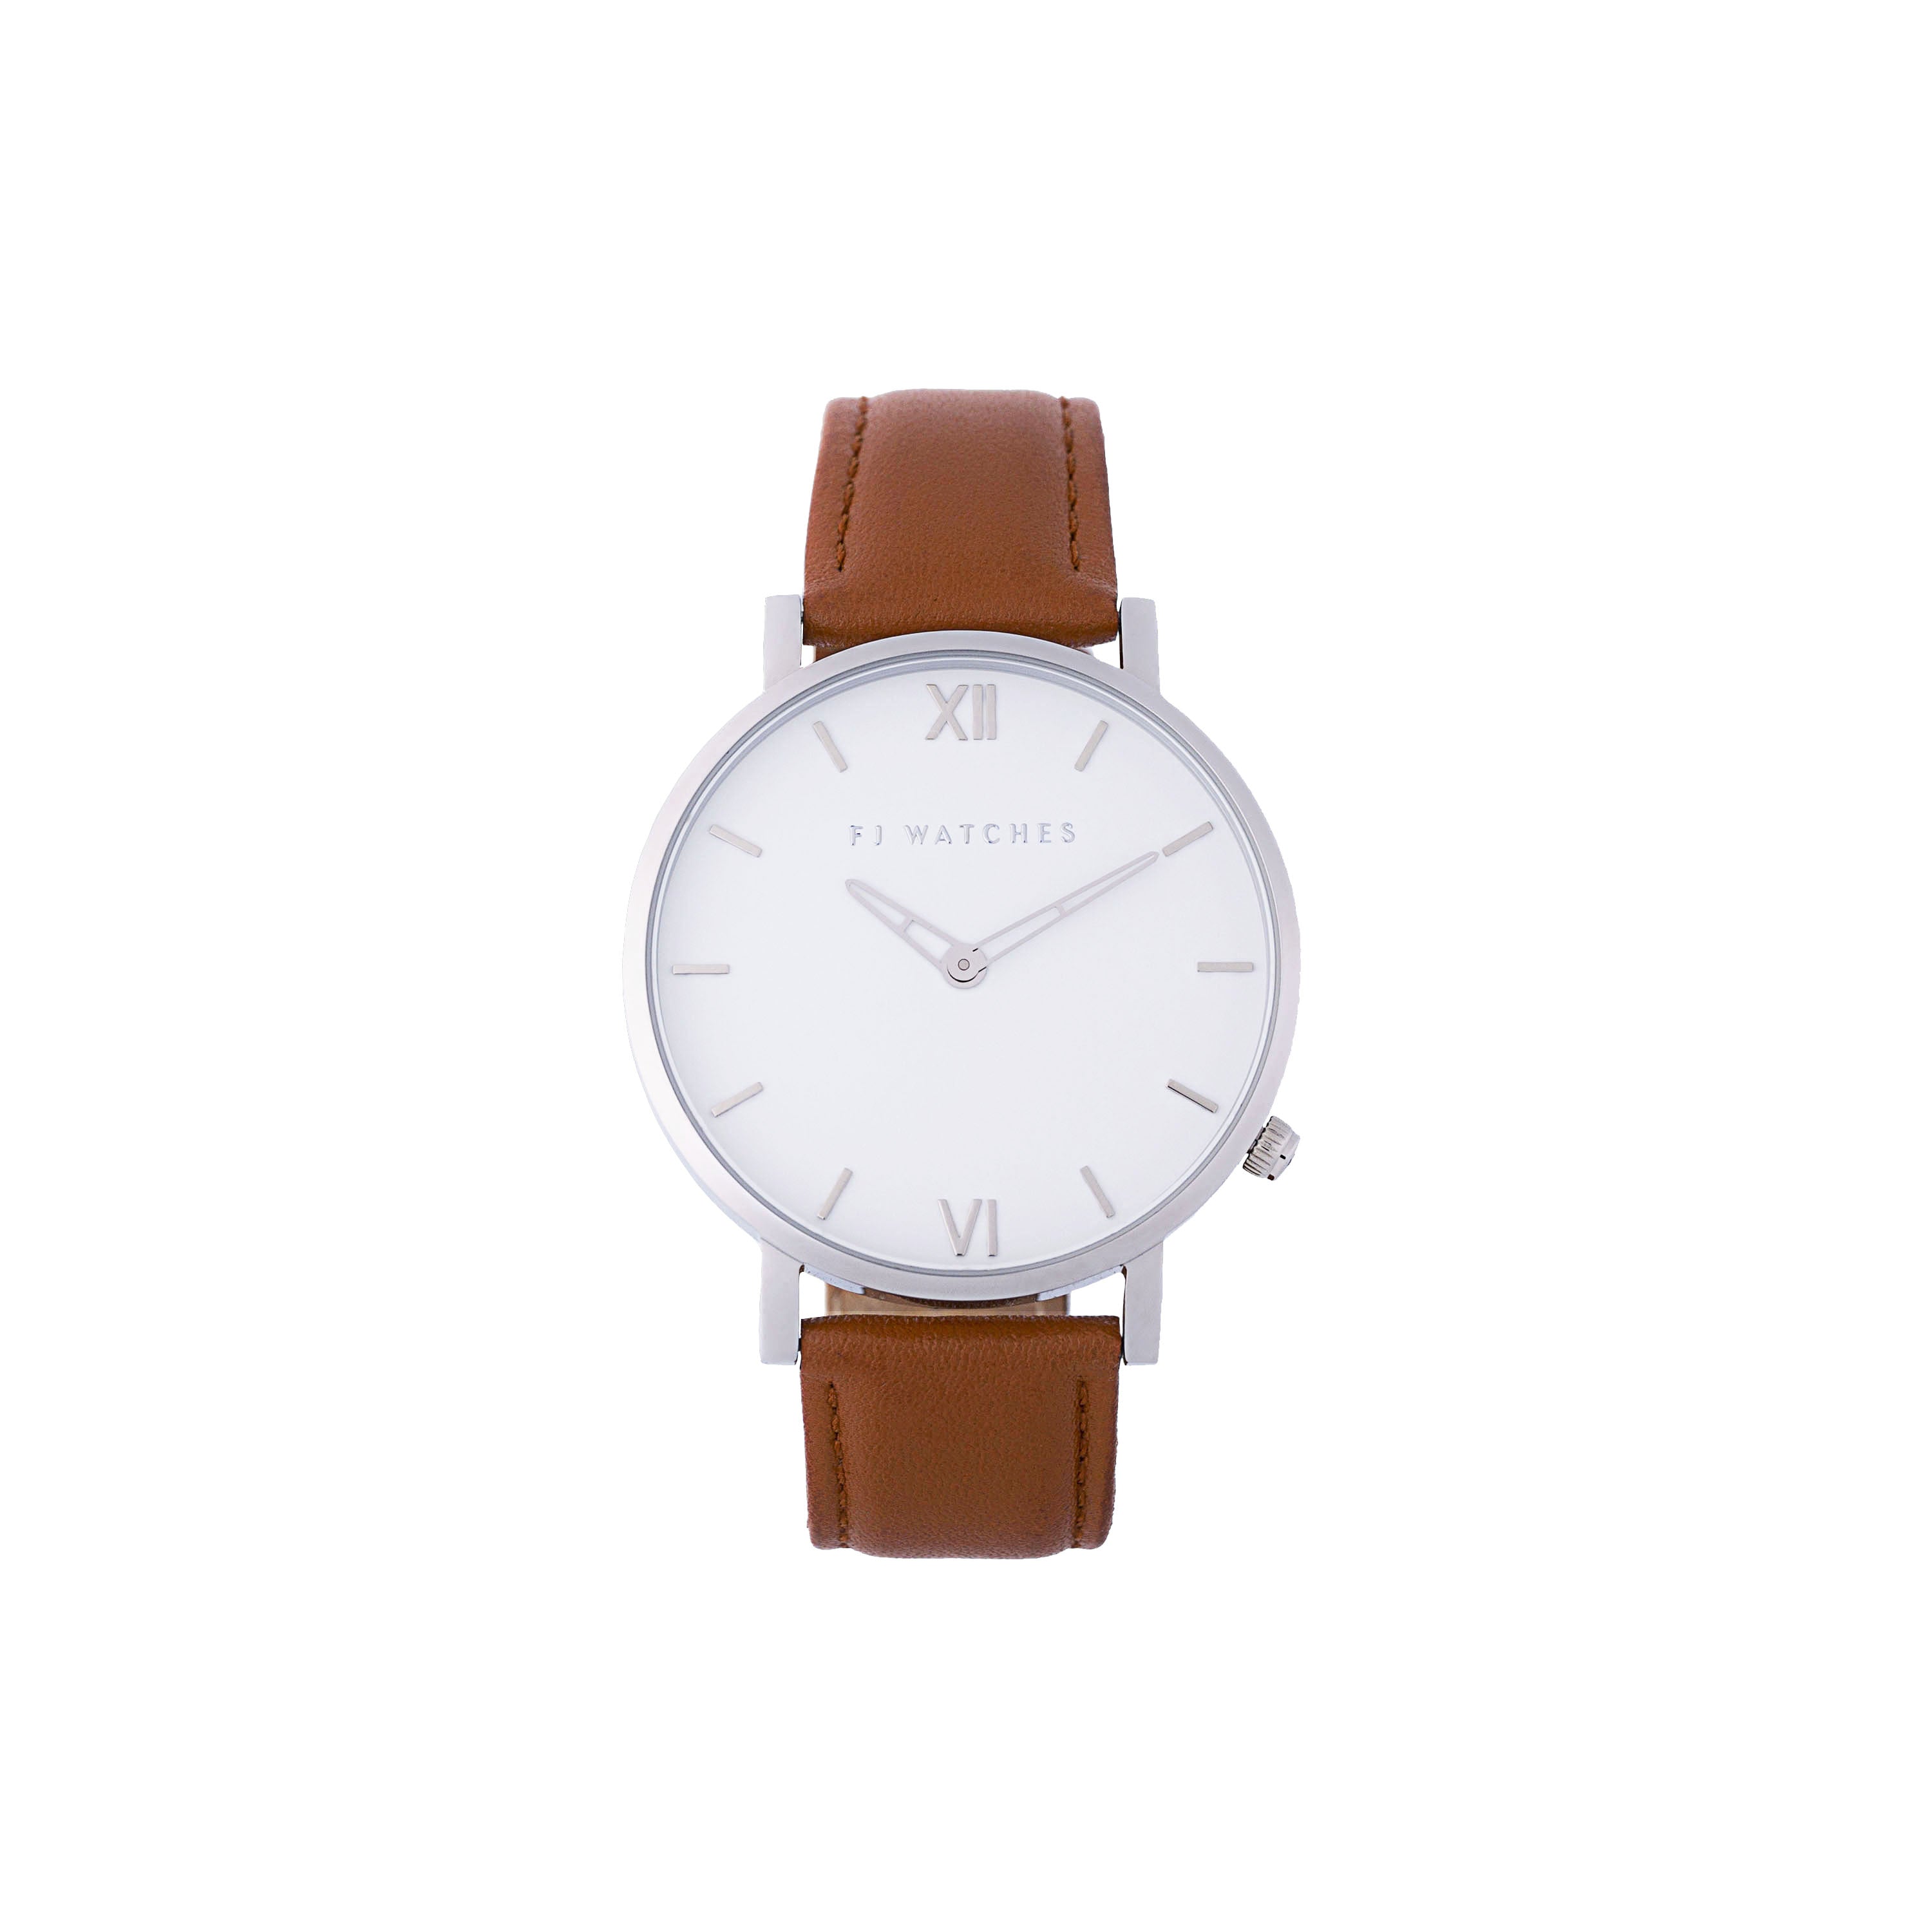 FJ Watches silver sun white men 42mm tan light brown leather strap watch minimalist